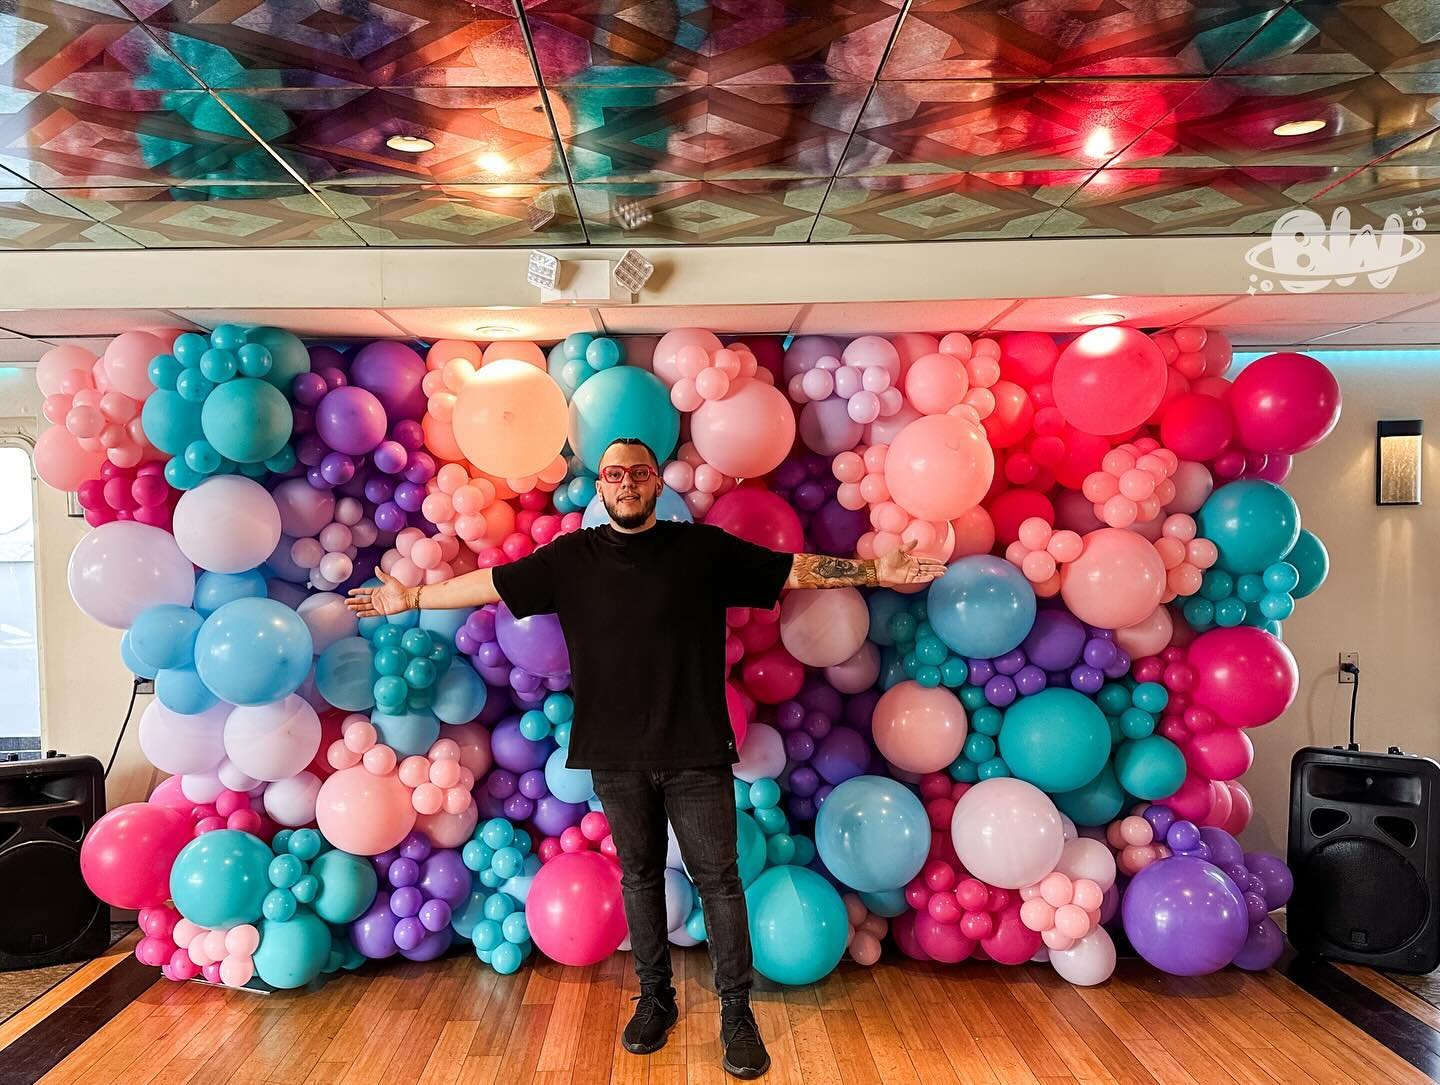 Swipe and look at this balloon wall from different angles 👐🎈
.
.
.
##Balloongarland #balloonwall #ballooncenterpieces #palmbeachballoons #balloonsbroward #balloonsmiami #fortlauderdaleballoons #balloonbouquet #bocaratonballoons #coralspringsballoon